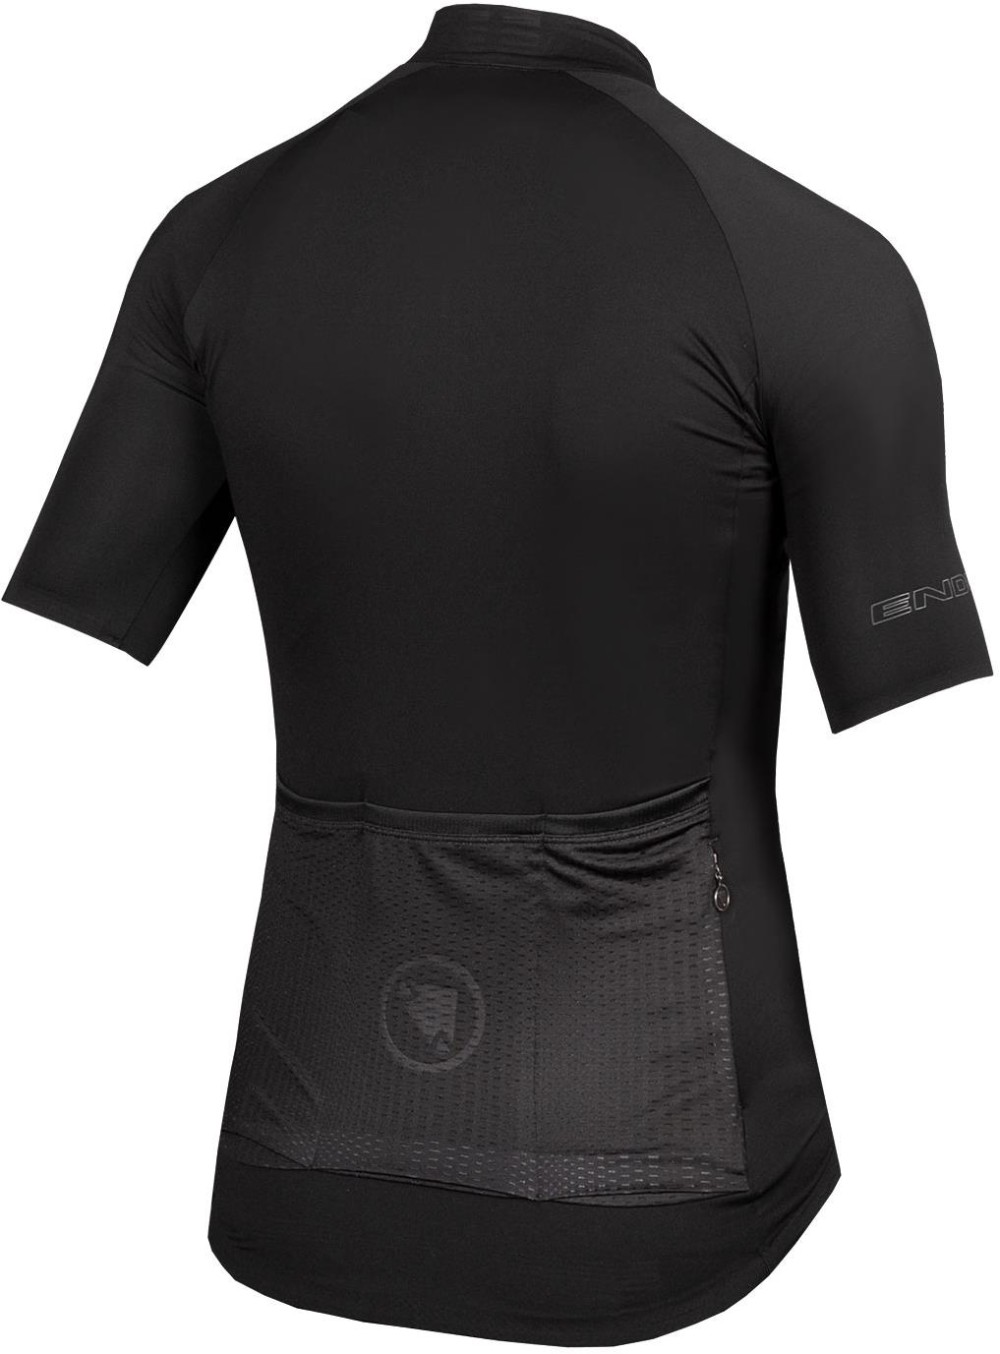 Pro SL Short Sleeve Cycling Jersey II image 1